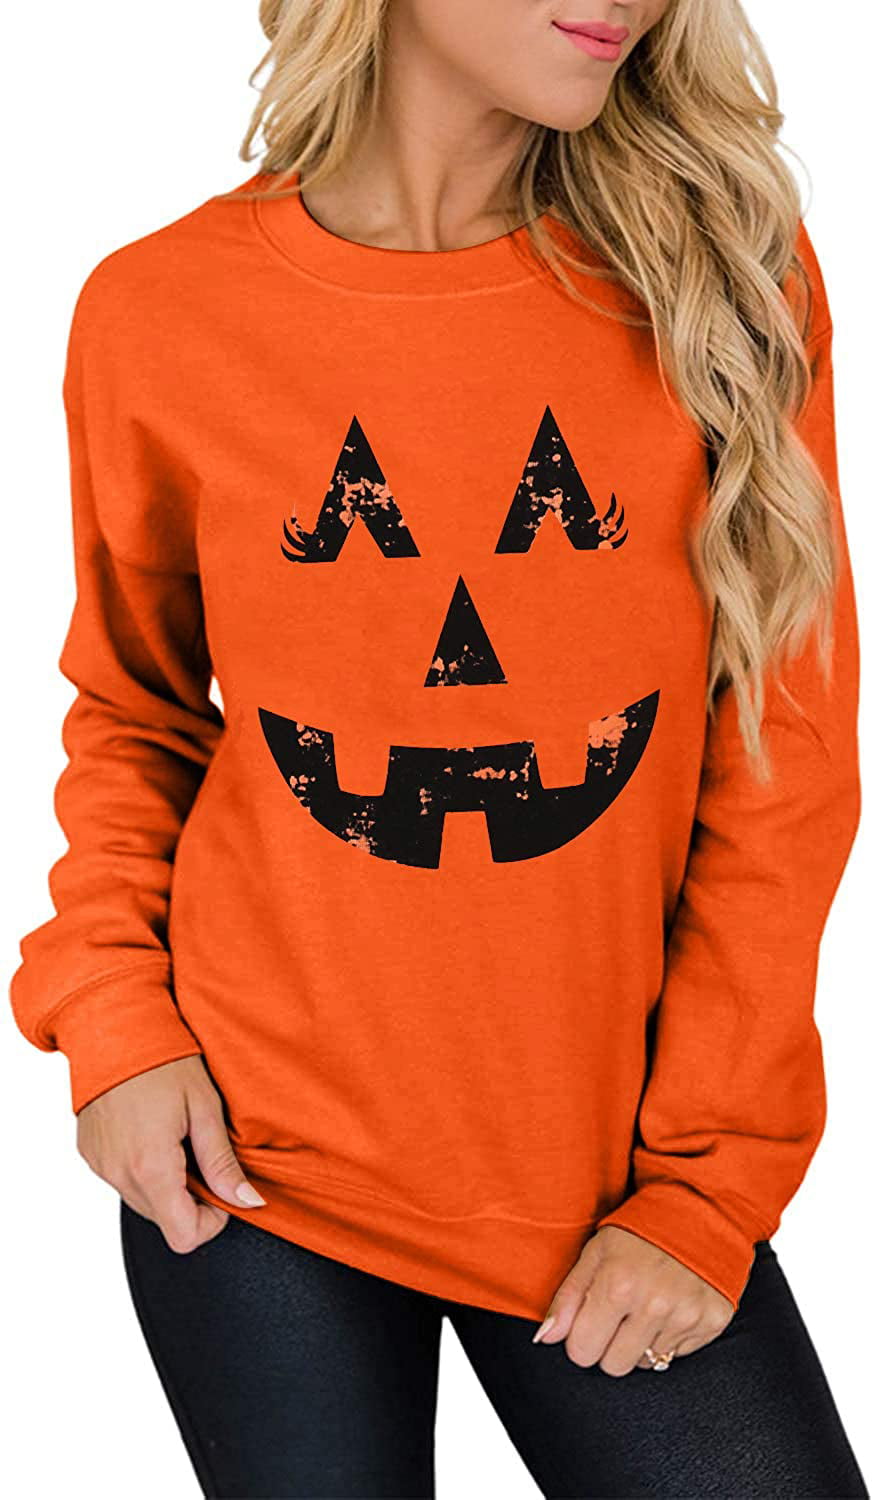 BEUU Halloween Sweatshirt for Women Pumpkin Graphic Pullover Sweater Long Sleeve Tops Crewneck Casual Blouses Costumes 